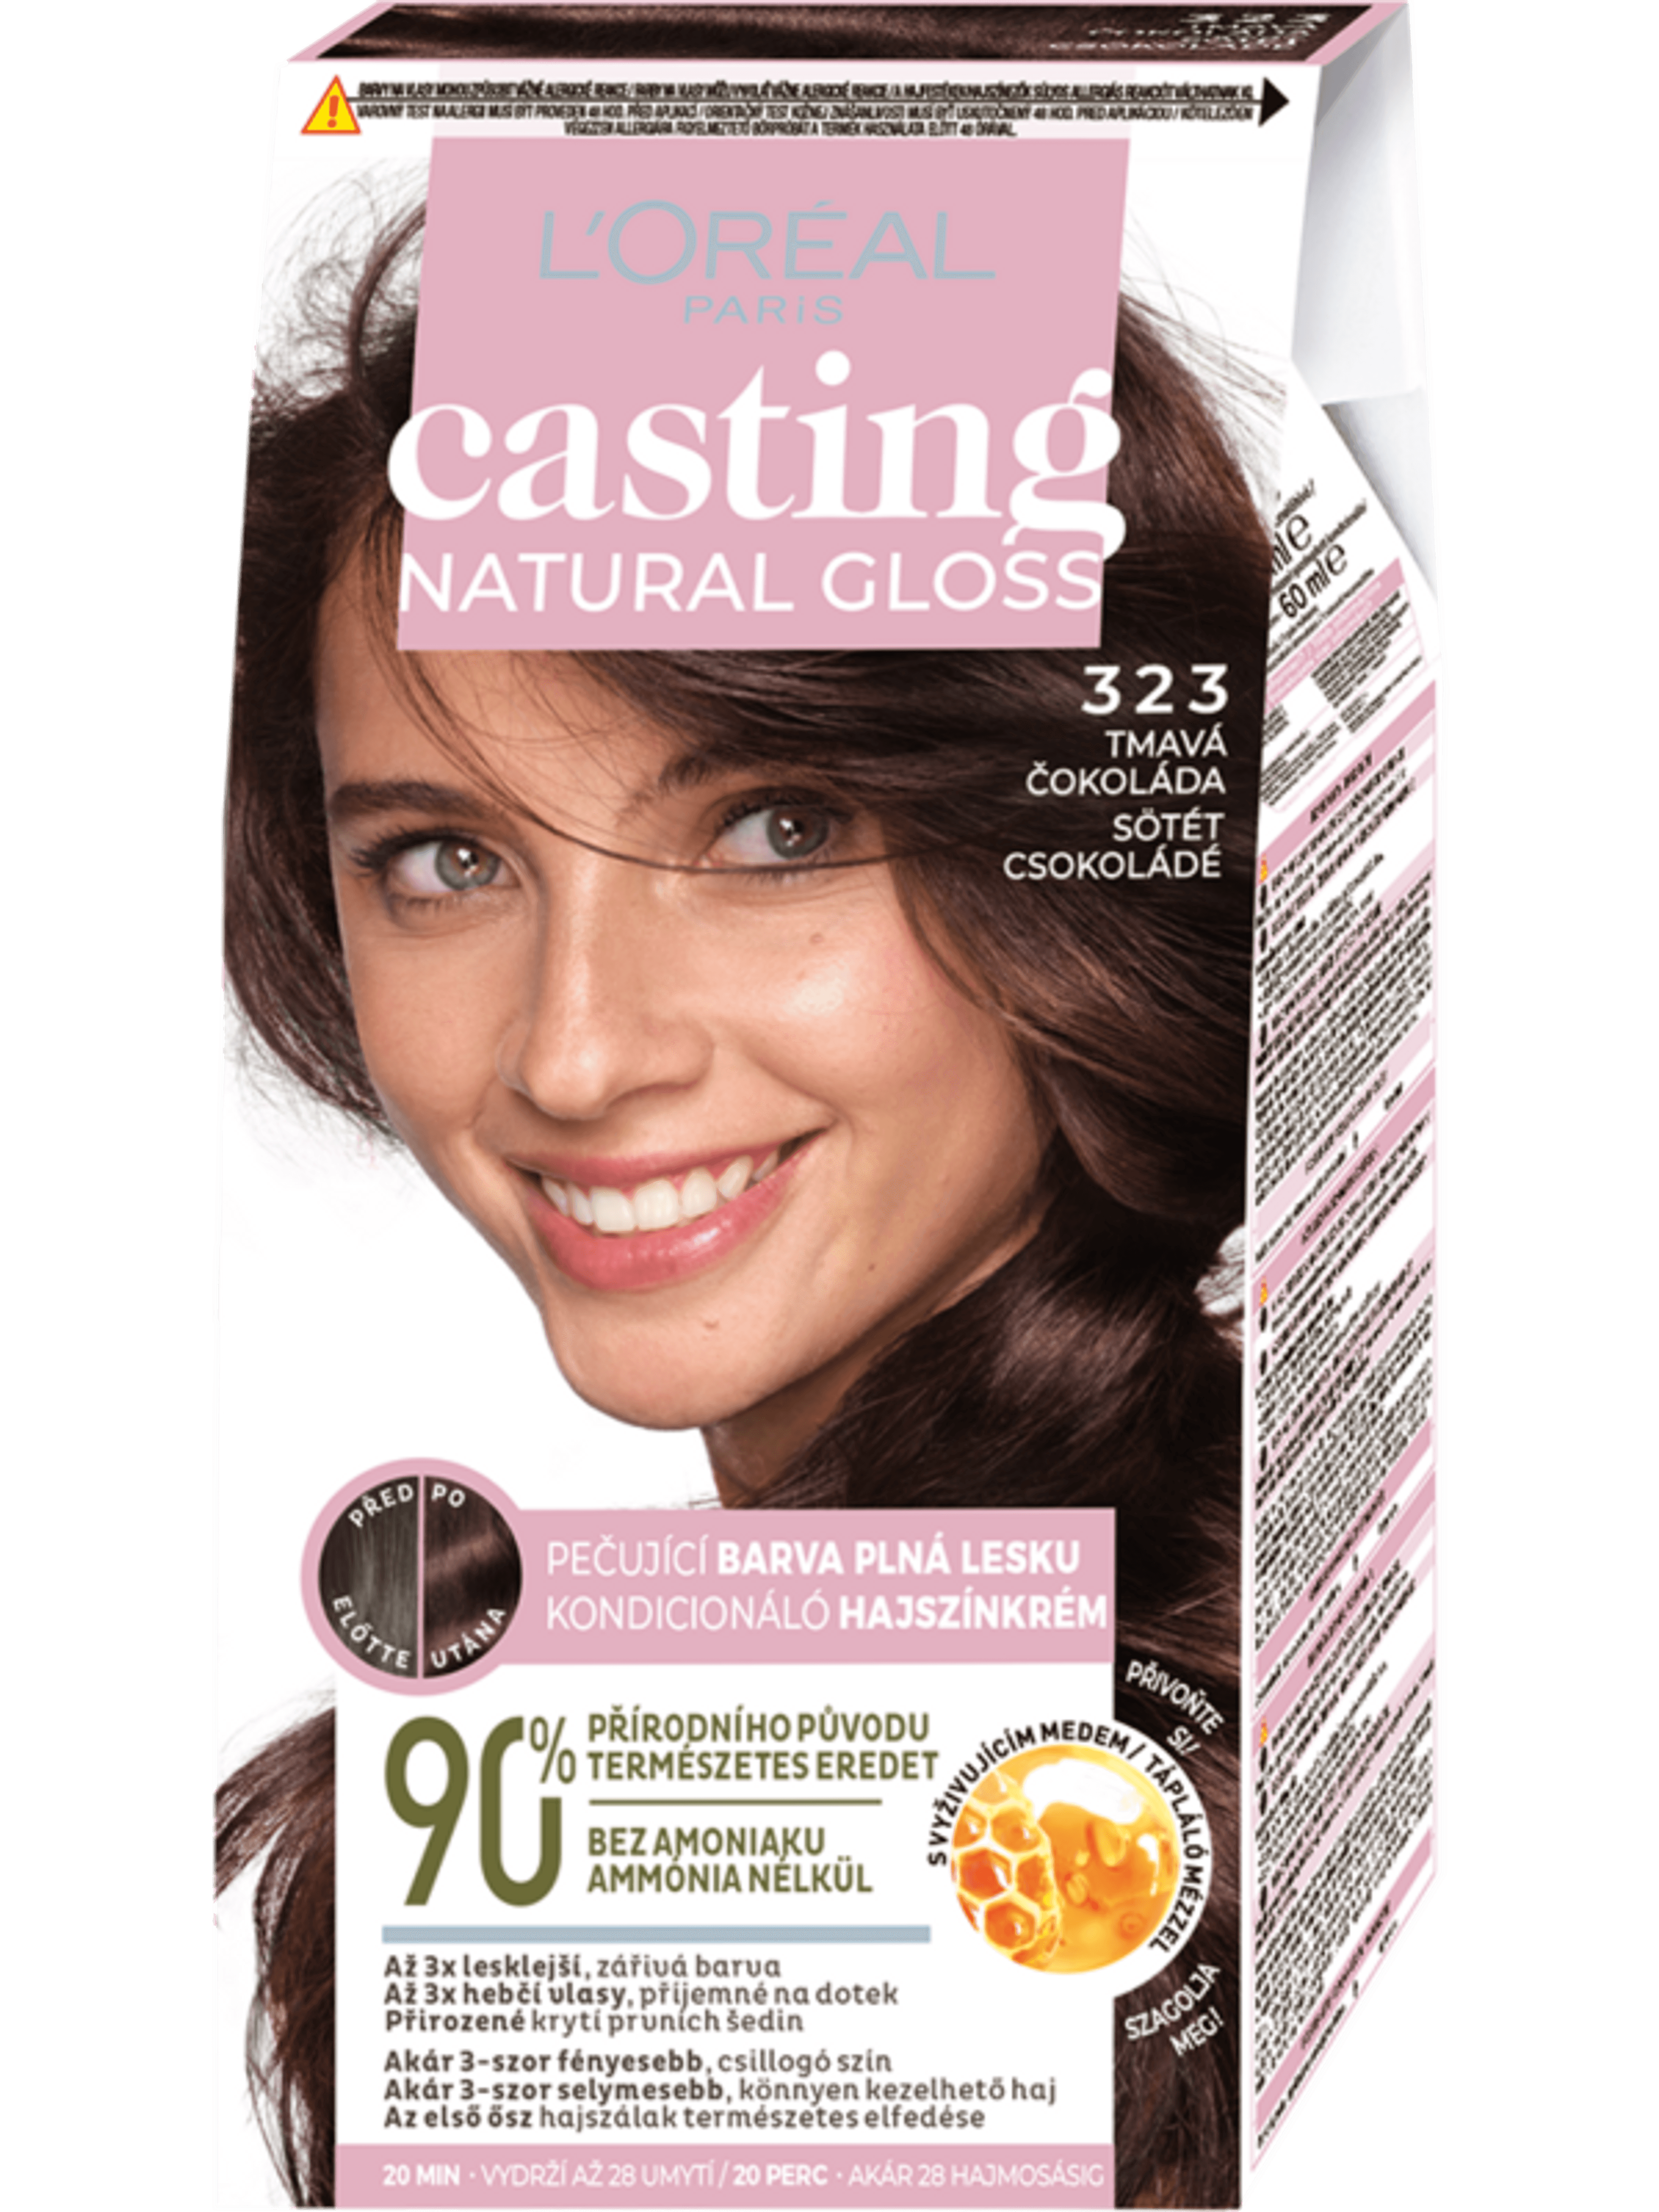 L'Oreal Paris Casting Natural Gloss hajszínező, 323 brown chocolate - 1 db-2